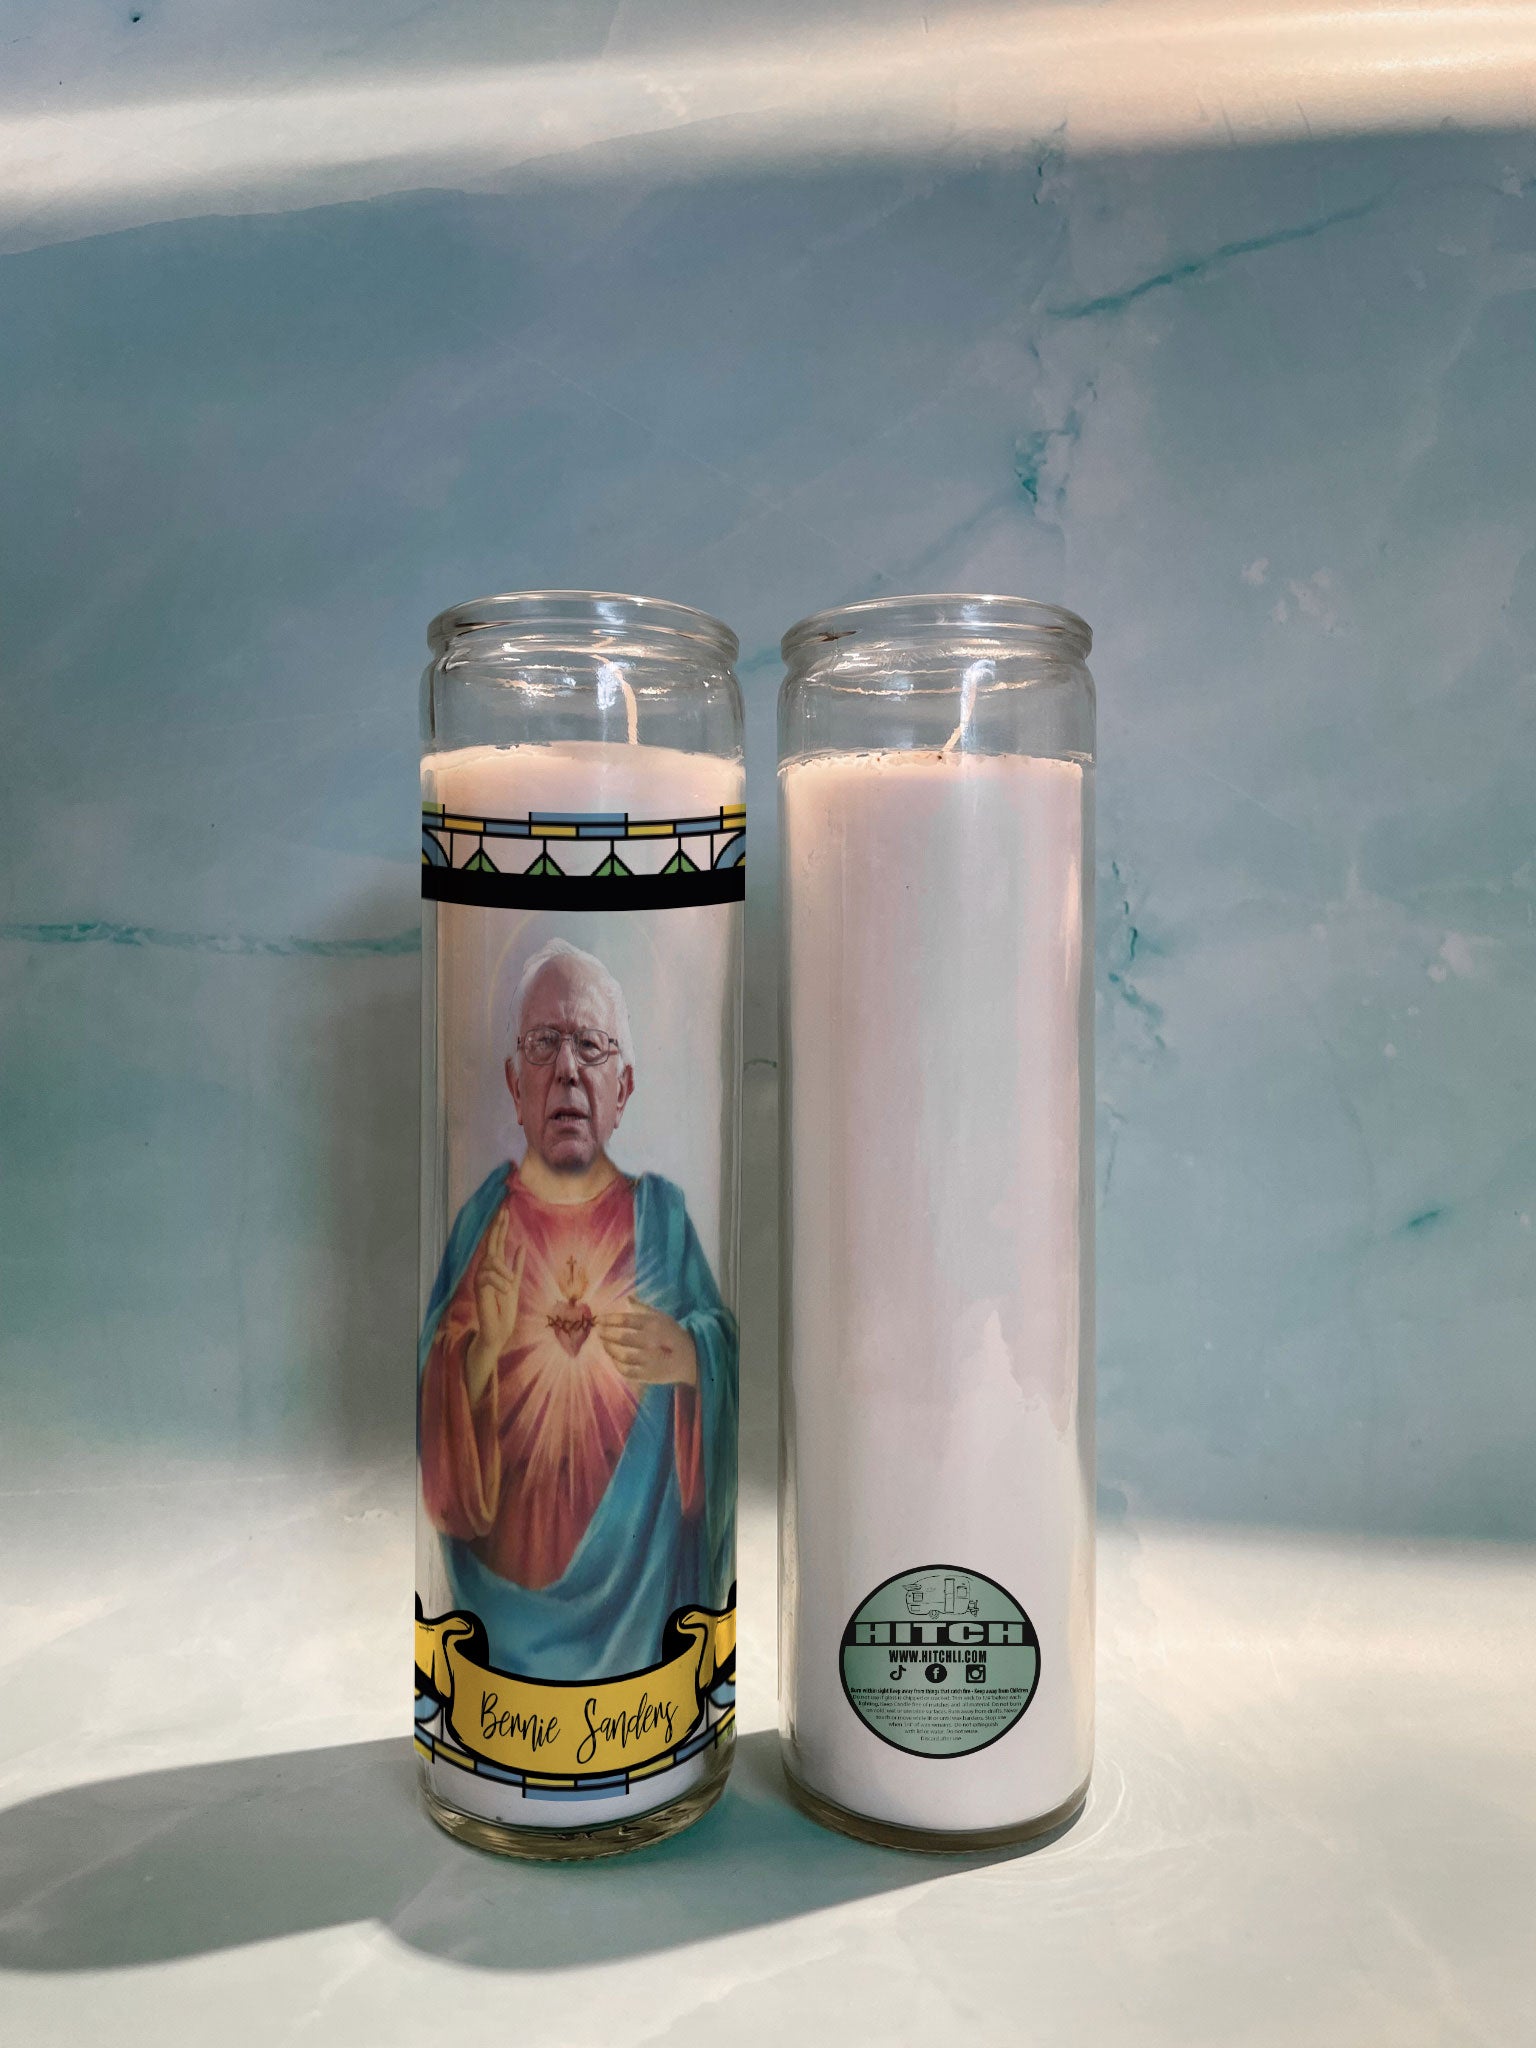 Bernie Sanders Original Prayer Candle